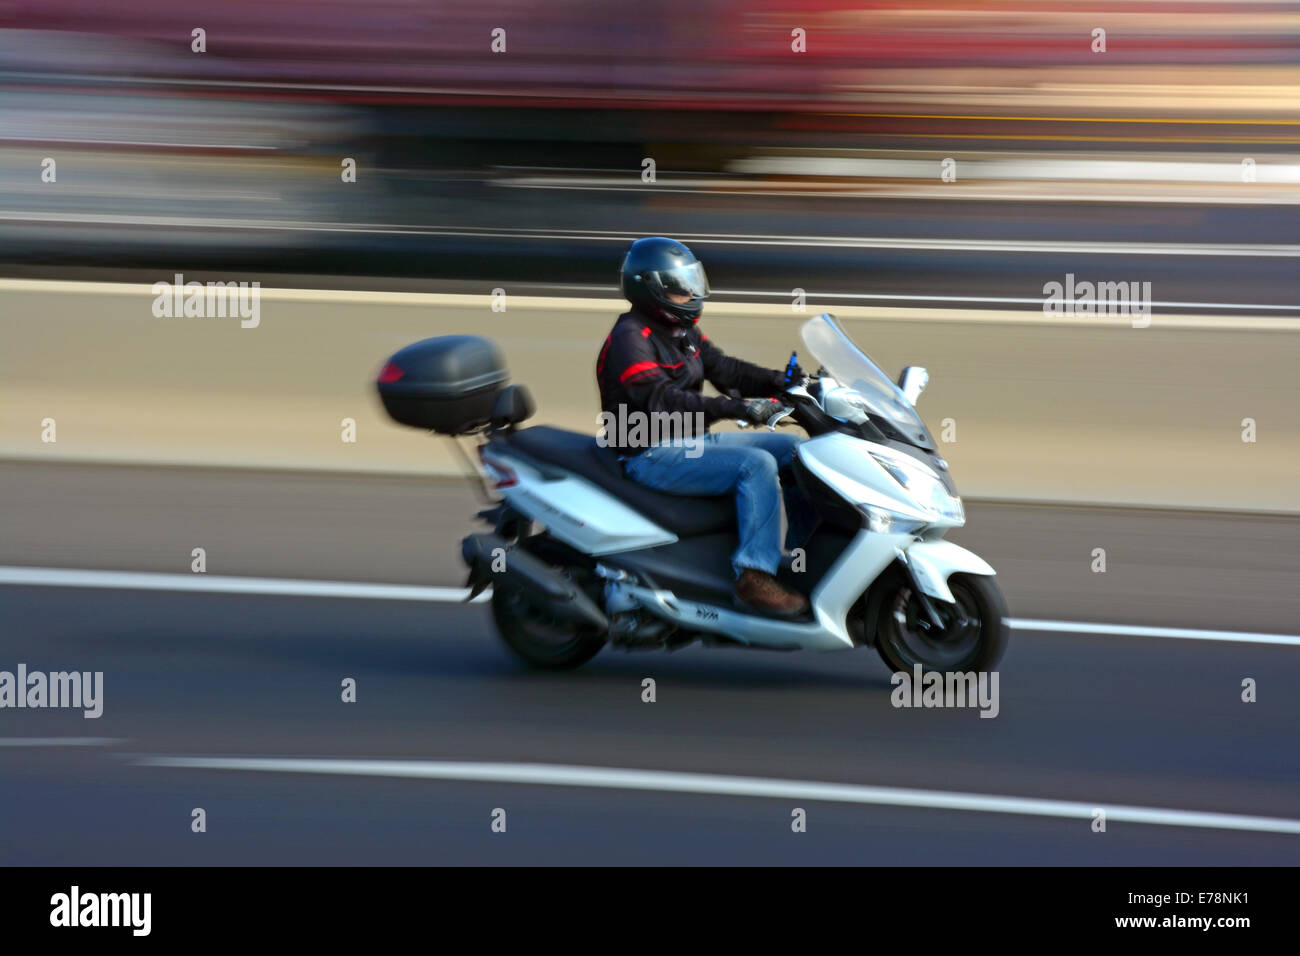 Moto, blurred motion Banque D'Images